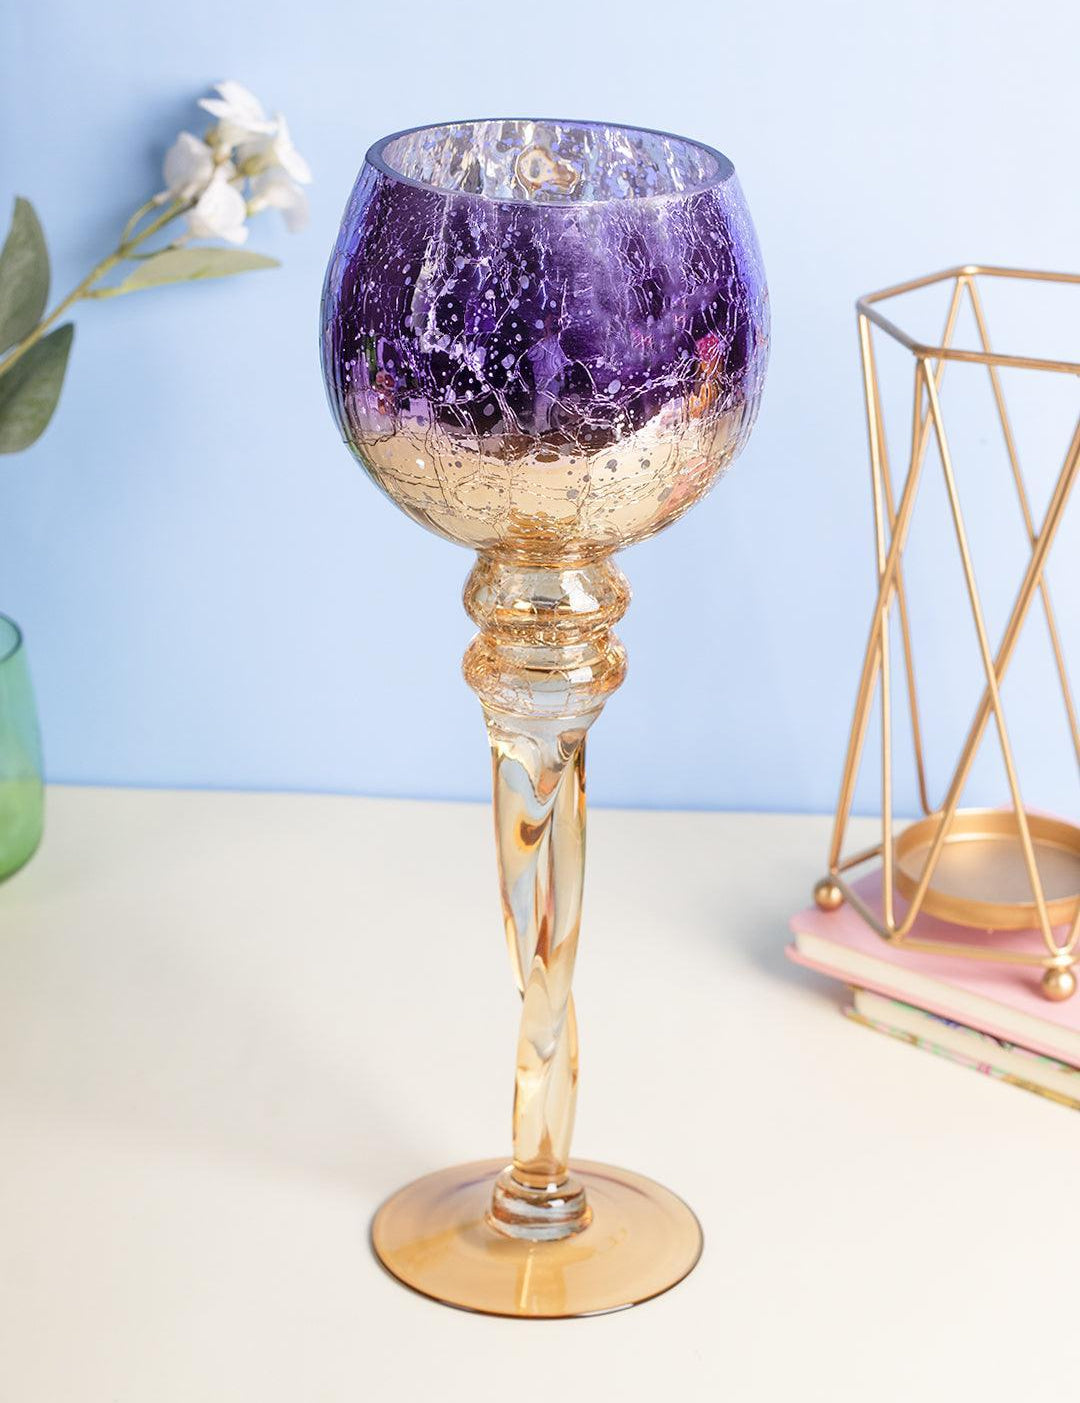 Decorative Purple Tined Glass Candlestick Holders - MARKET 99